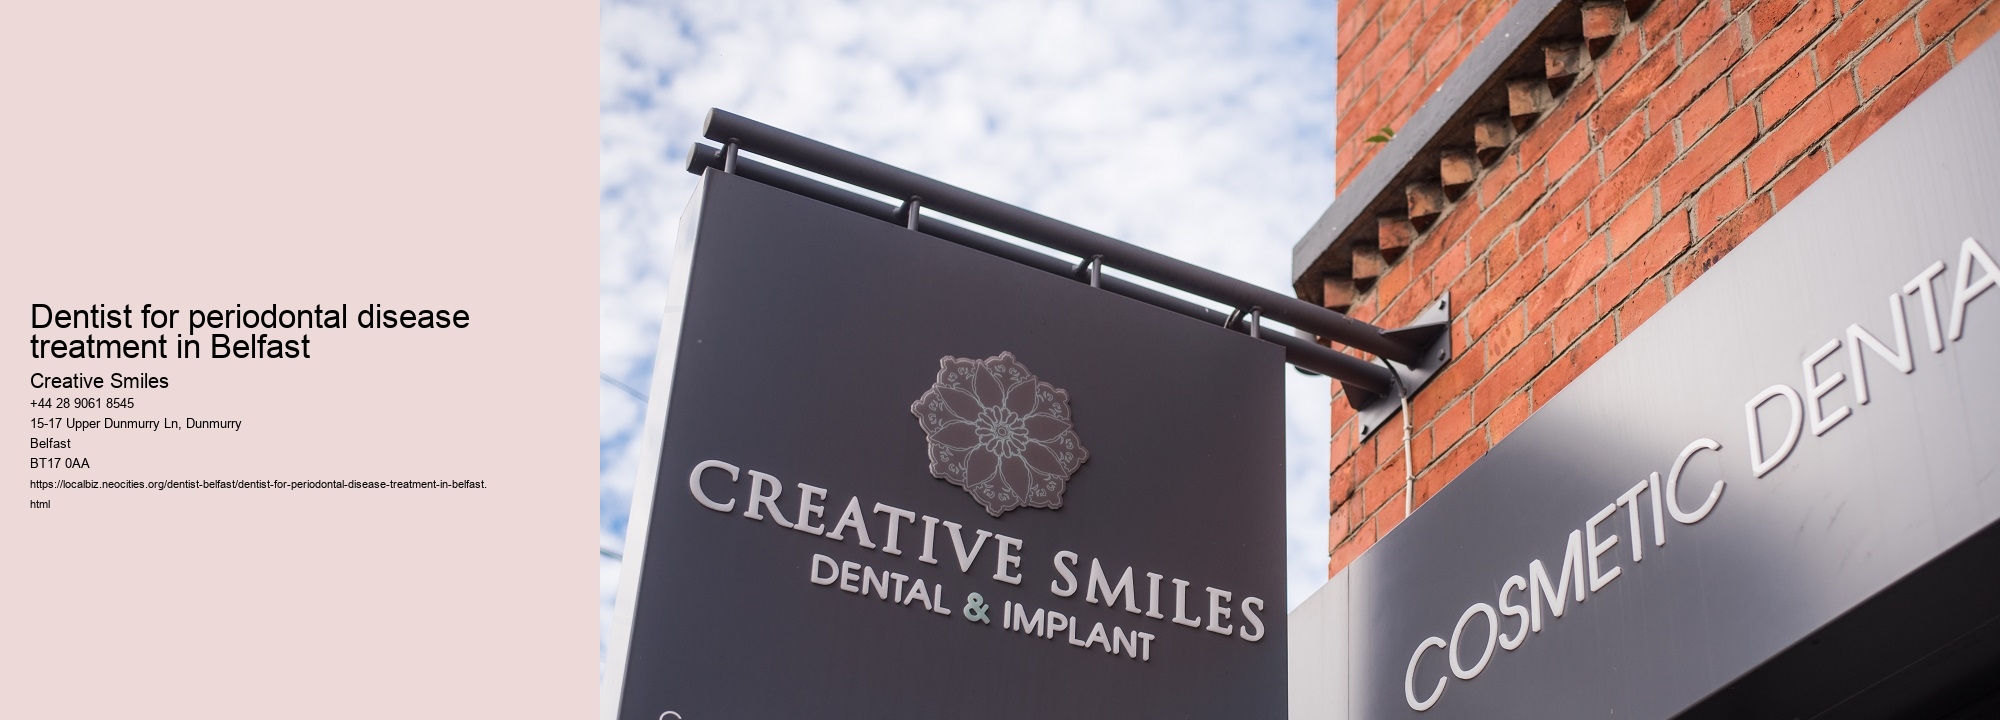 Dentist for periodontal disease treatment in Belfast